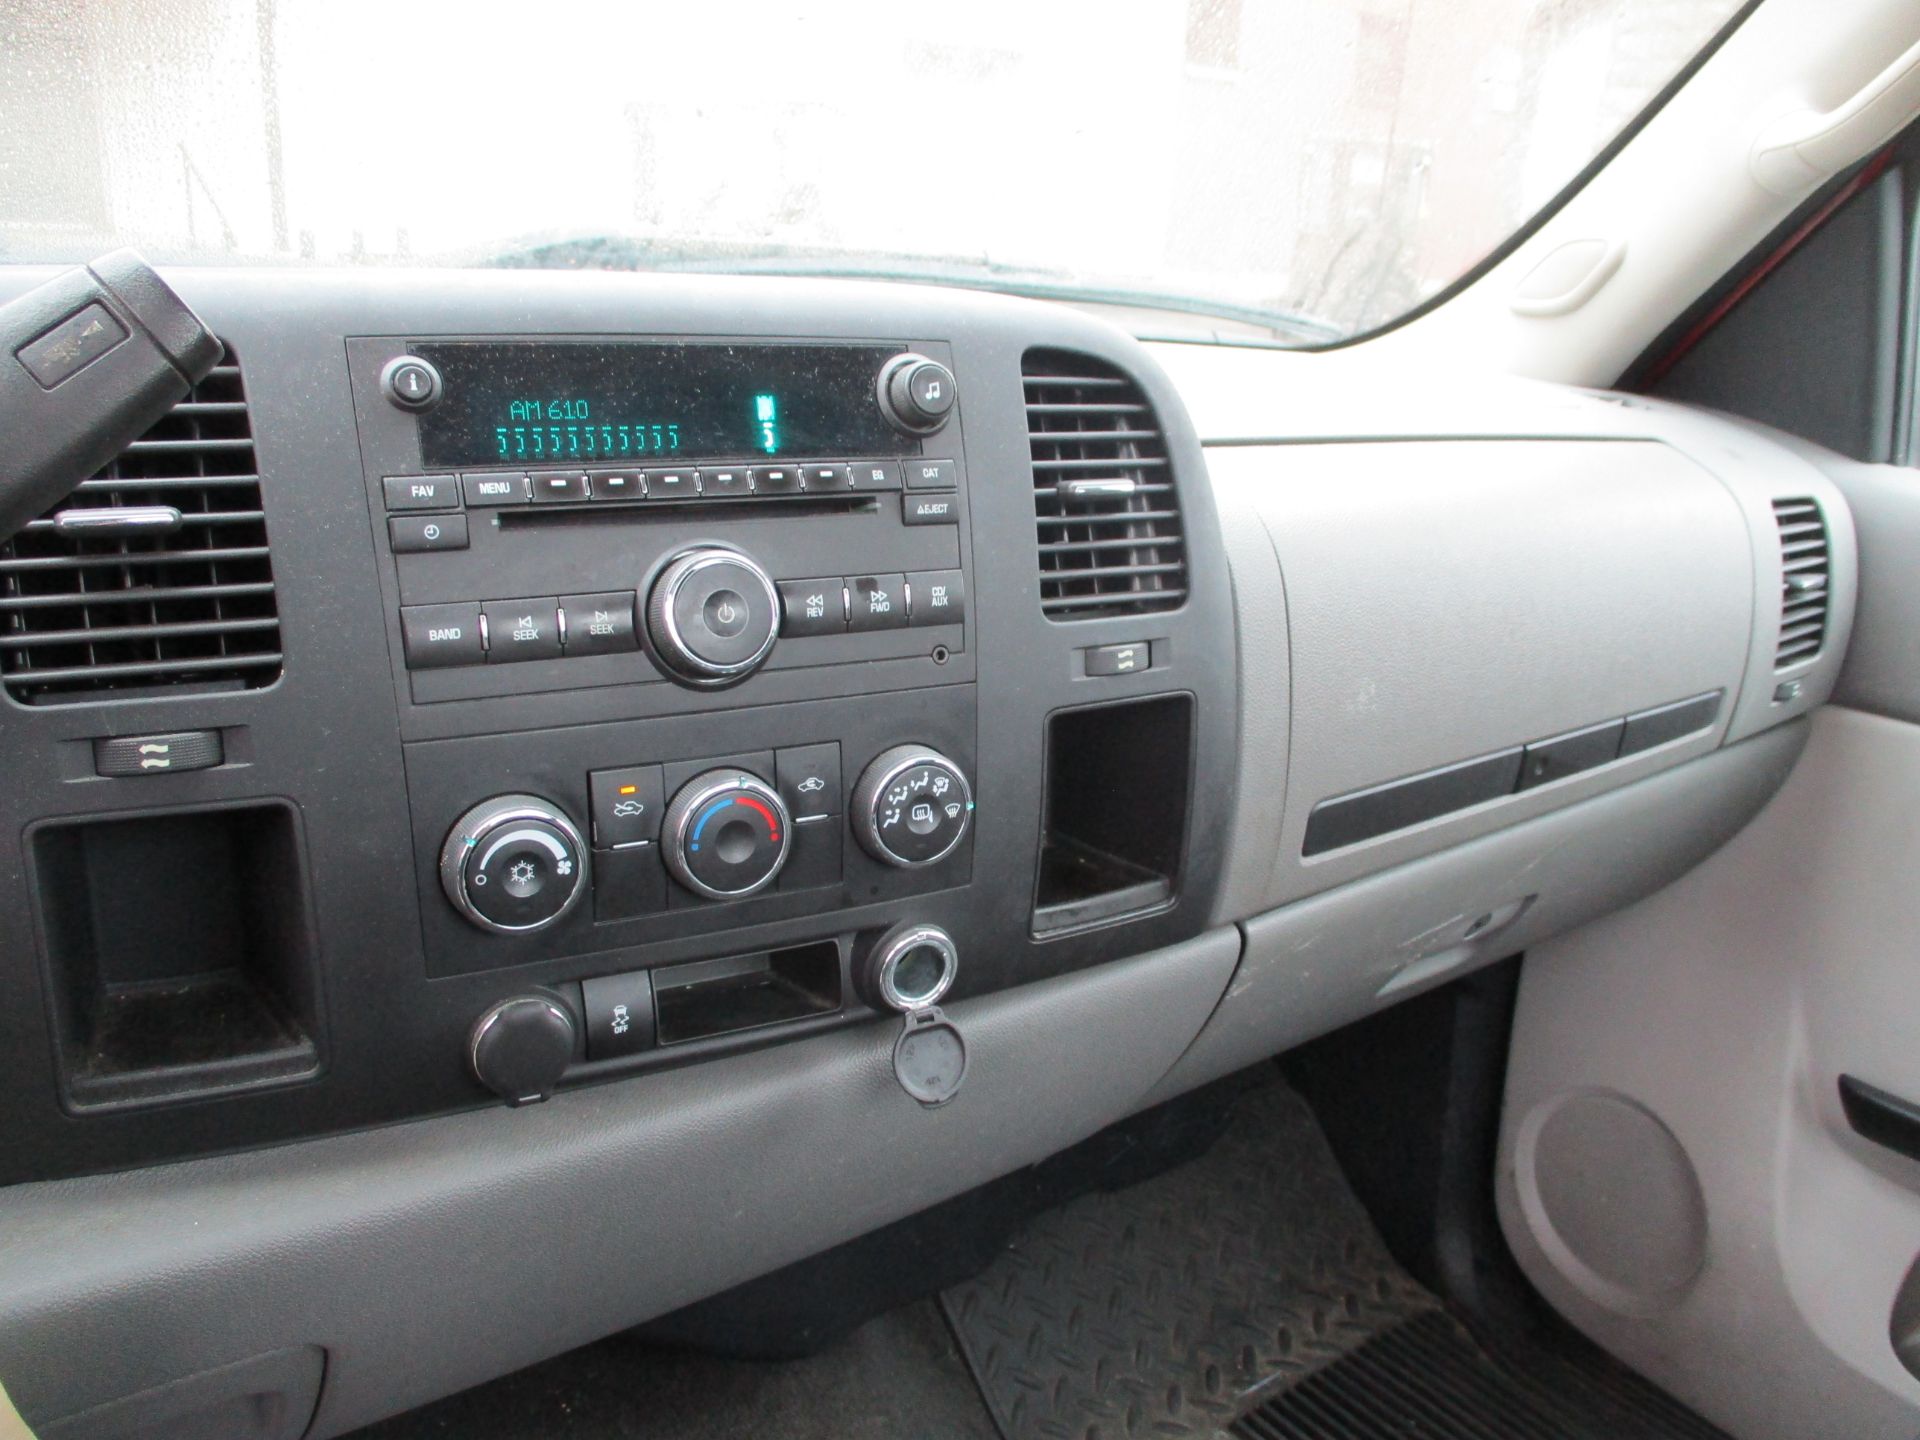 2012 GMC Sierra 1500 Pickup, VIN 1GTN1TEAXCZ138182, Regular Cab, Automatic, AC, 8' Bed, Tonneau - Image 17 of 24